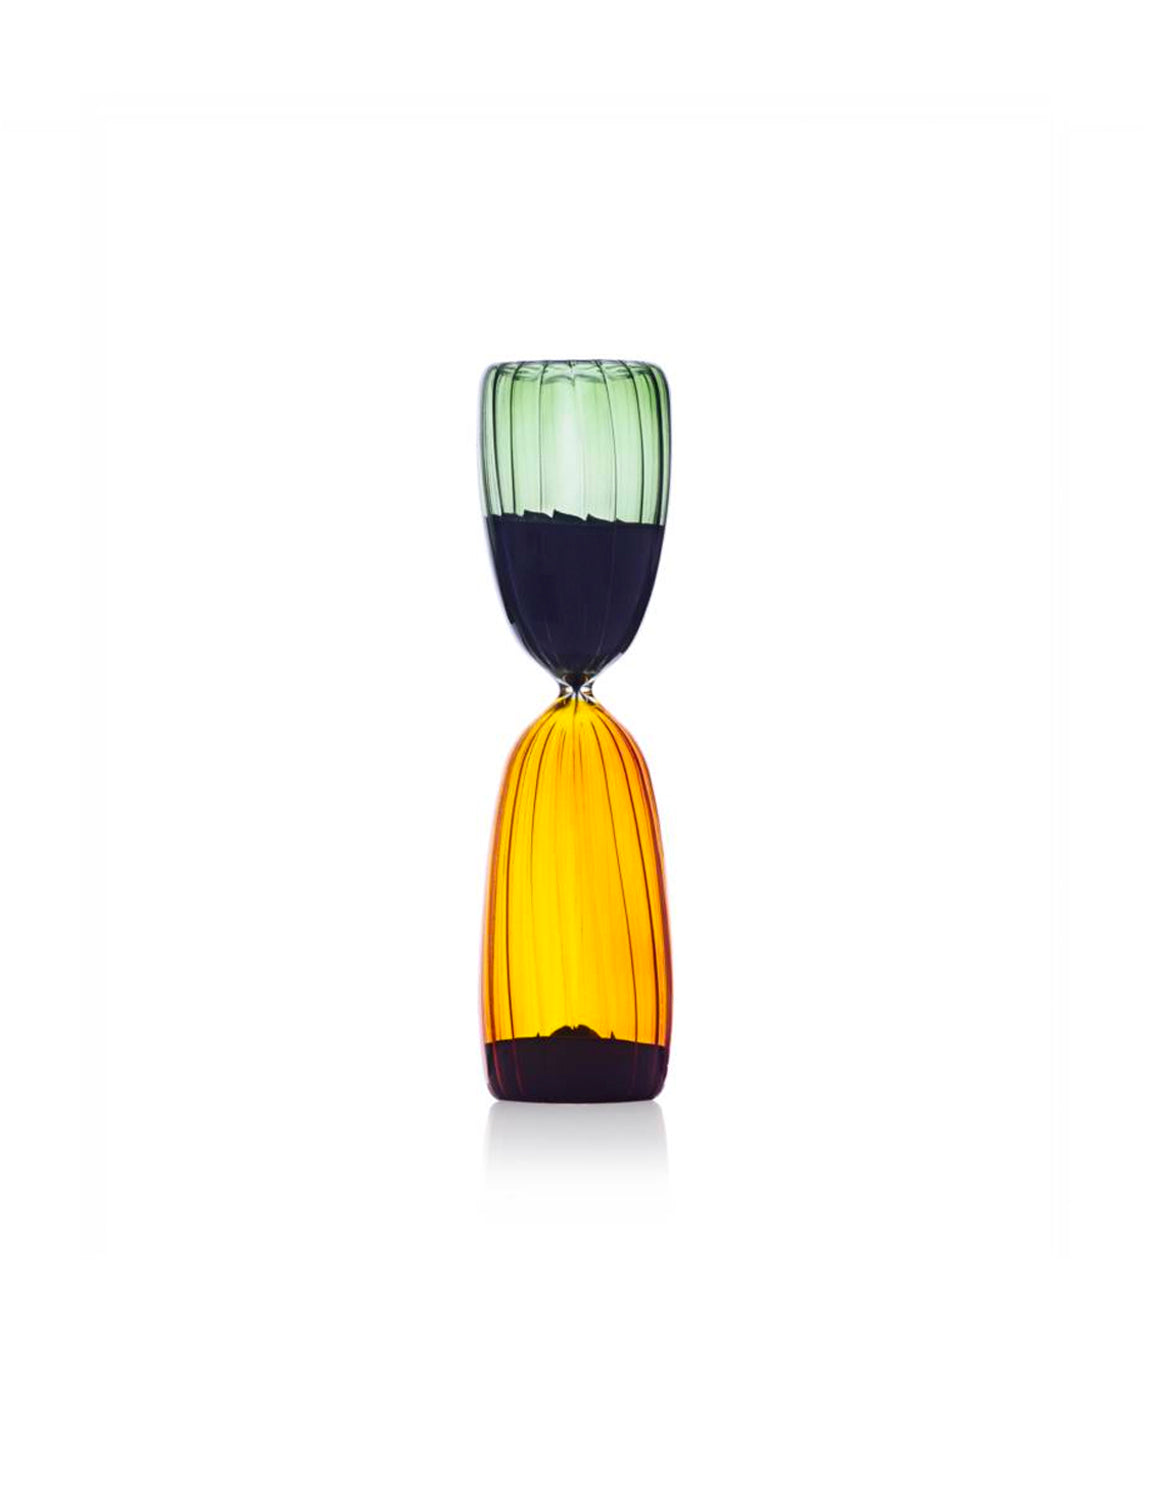 Ichendorf Times Hourglass 15min, green/amber